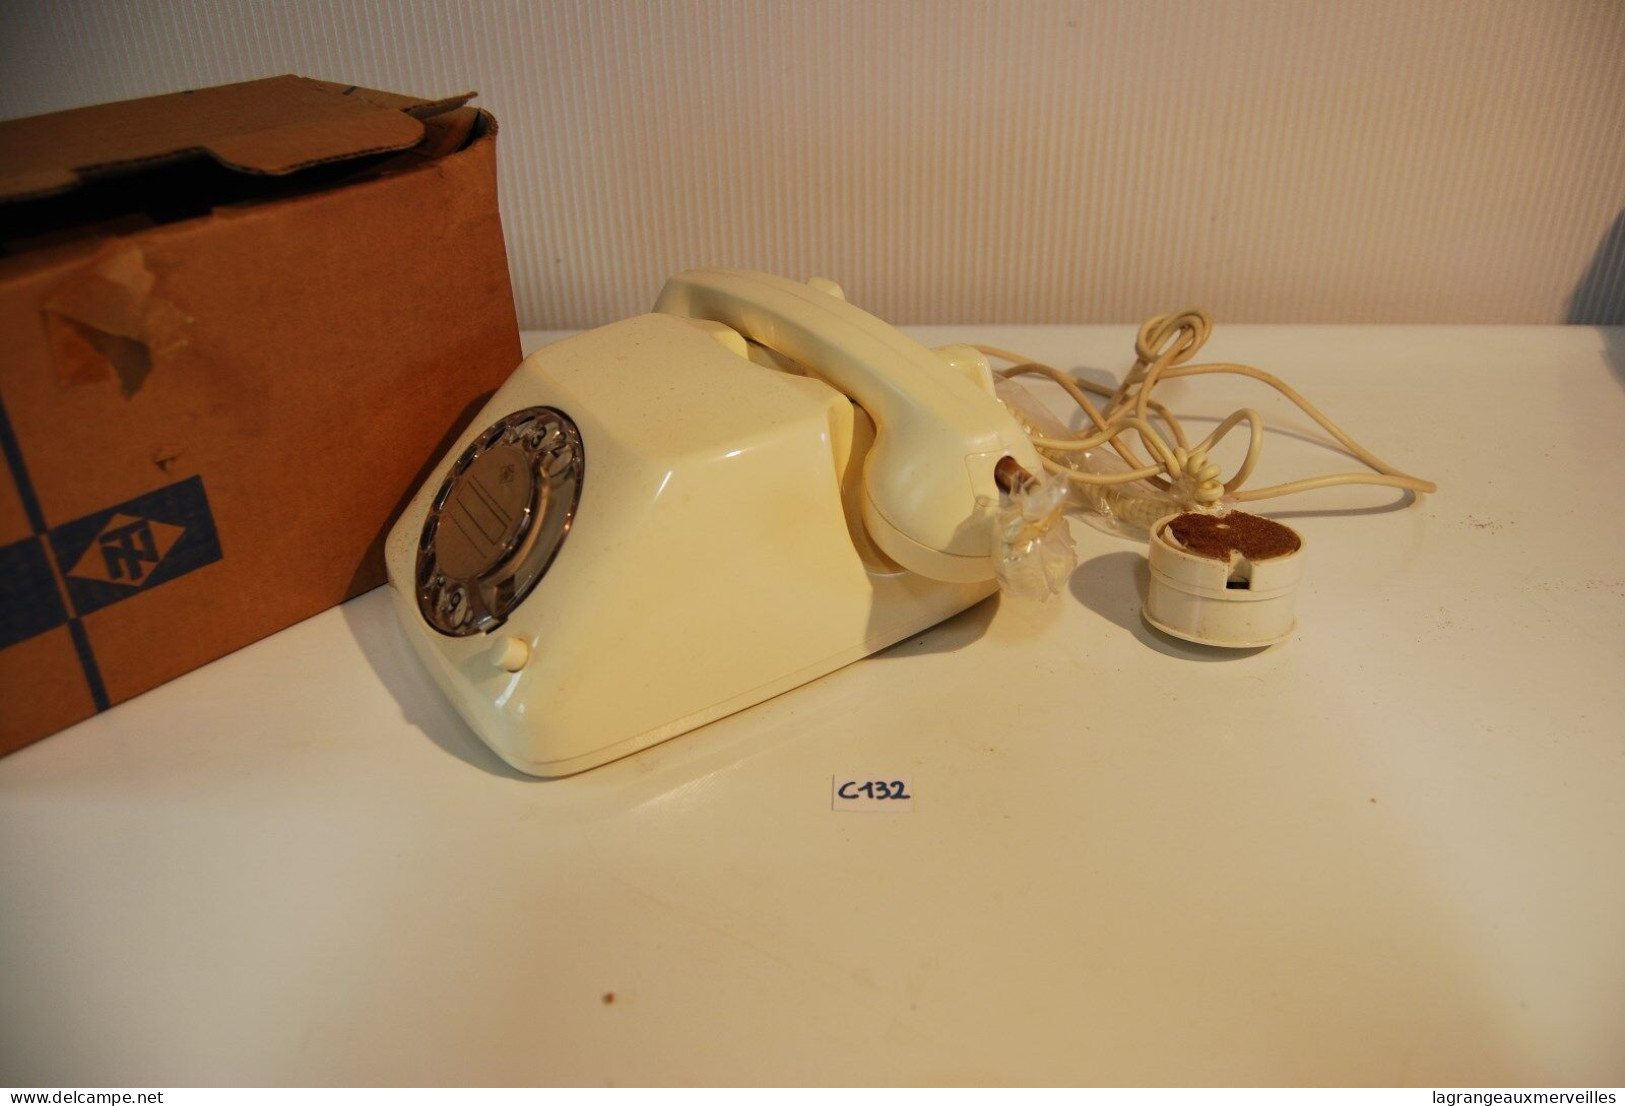 C132 Vintage Retro Phone FEUER NOTRUF Germany BLANC Avec écouteur - Telephony